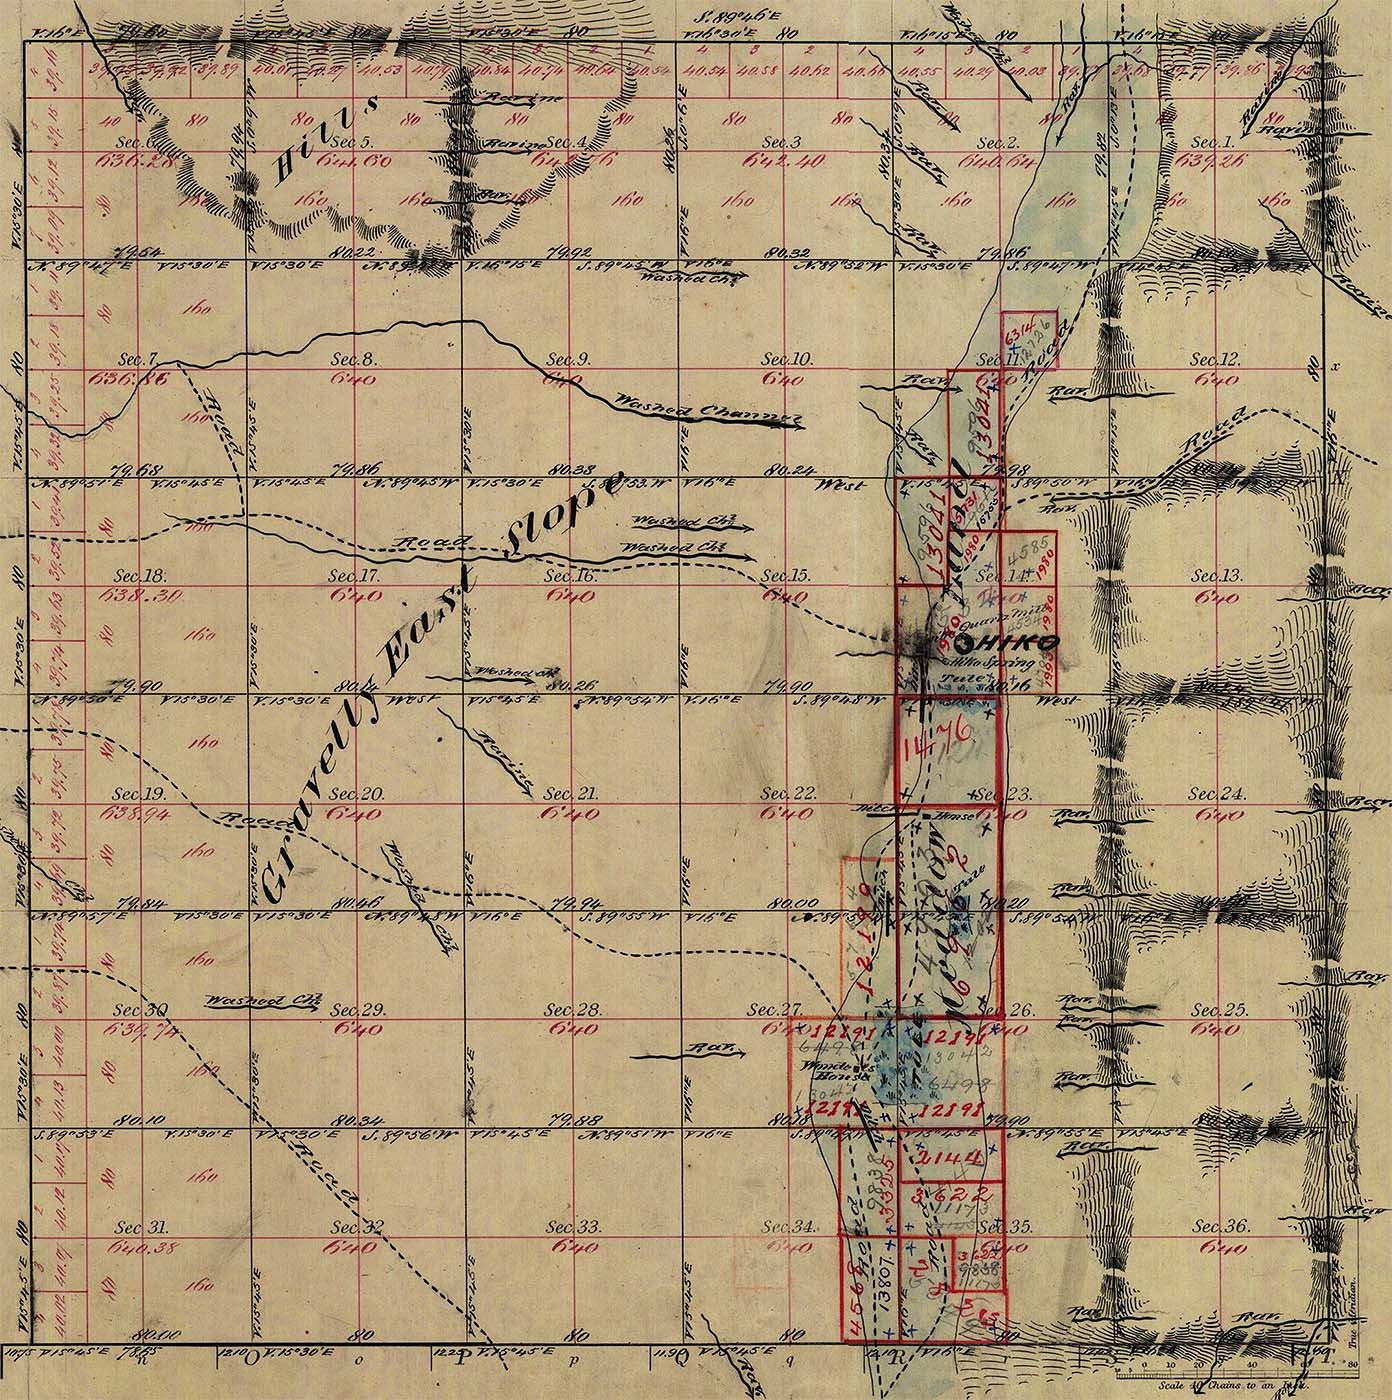 Hiko Nevada township map